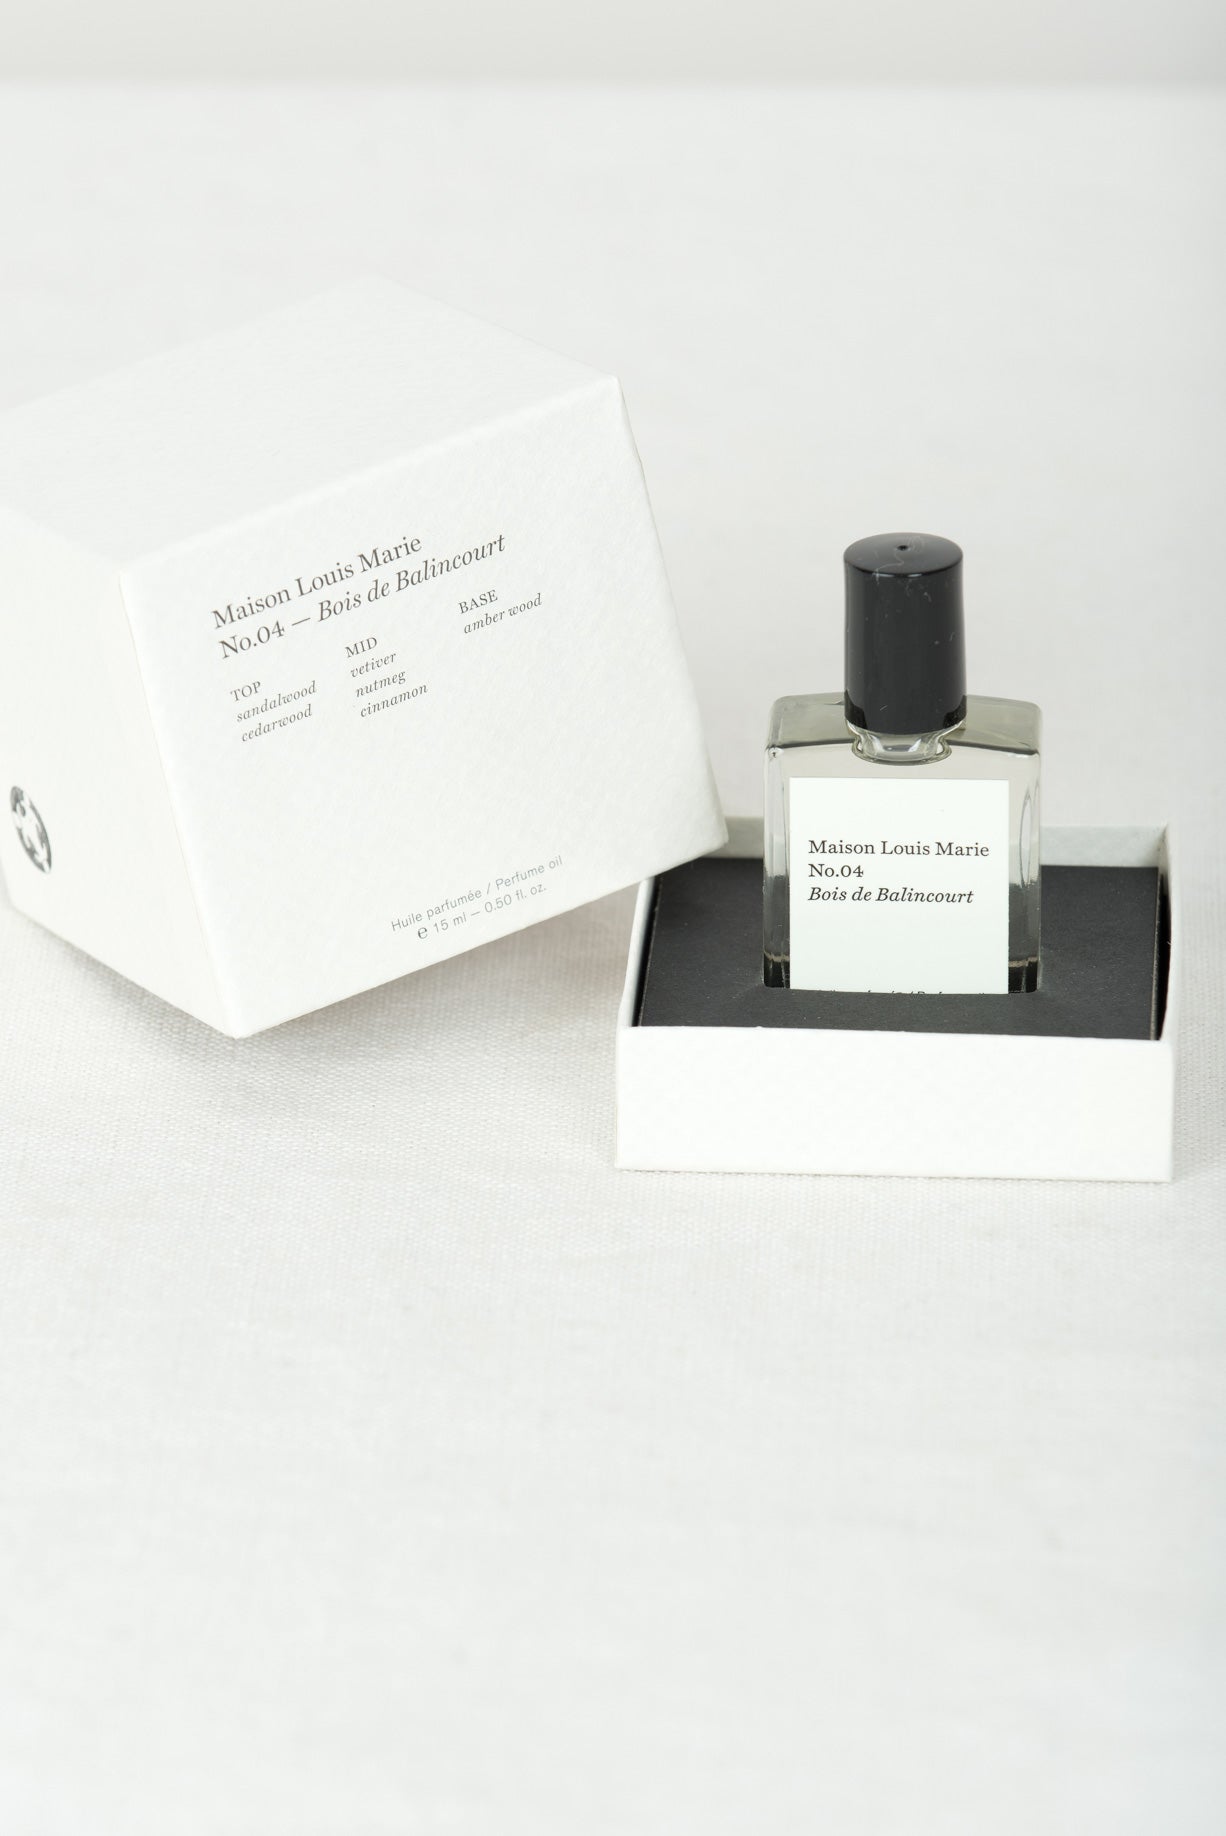 Maison Louis Marie No. 03 L'etang Noir Perfume Oil, 15 ml In